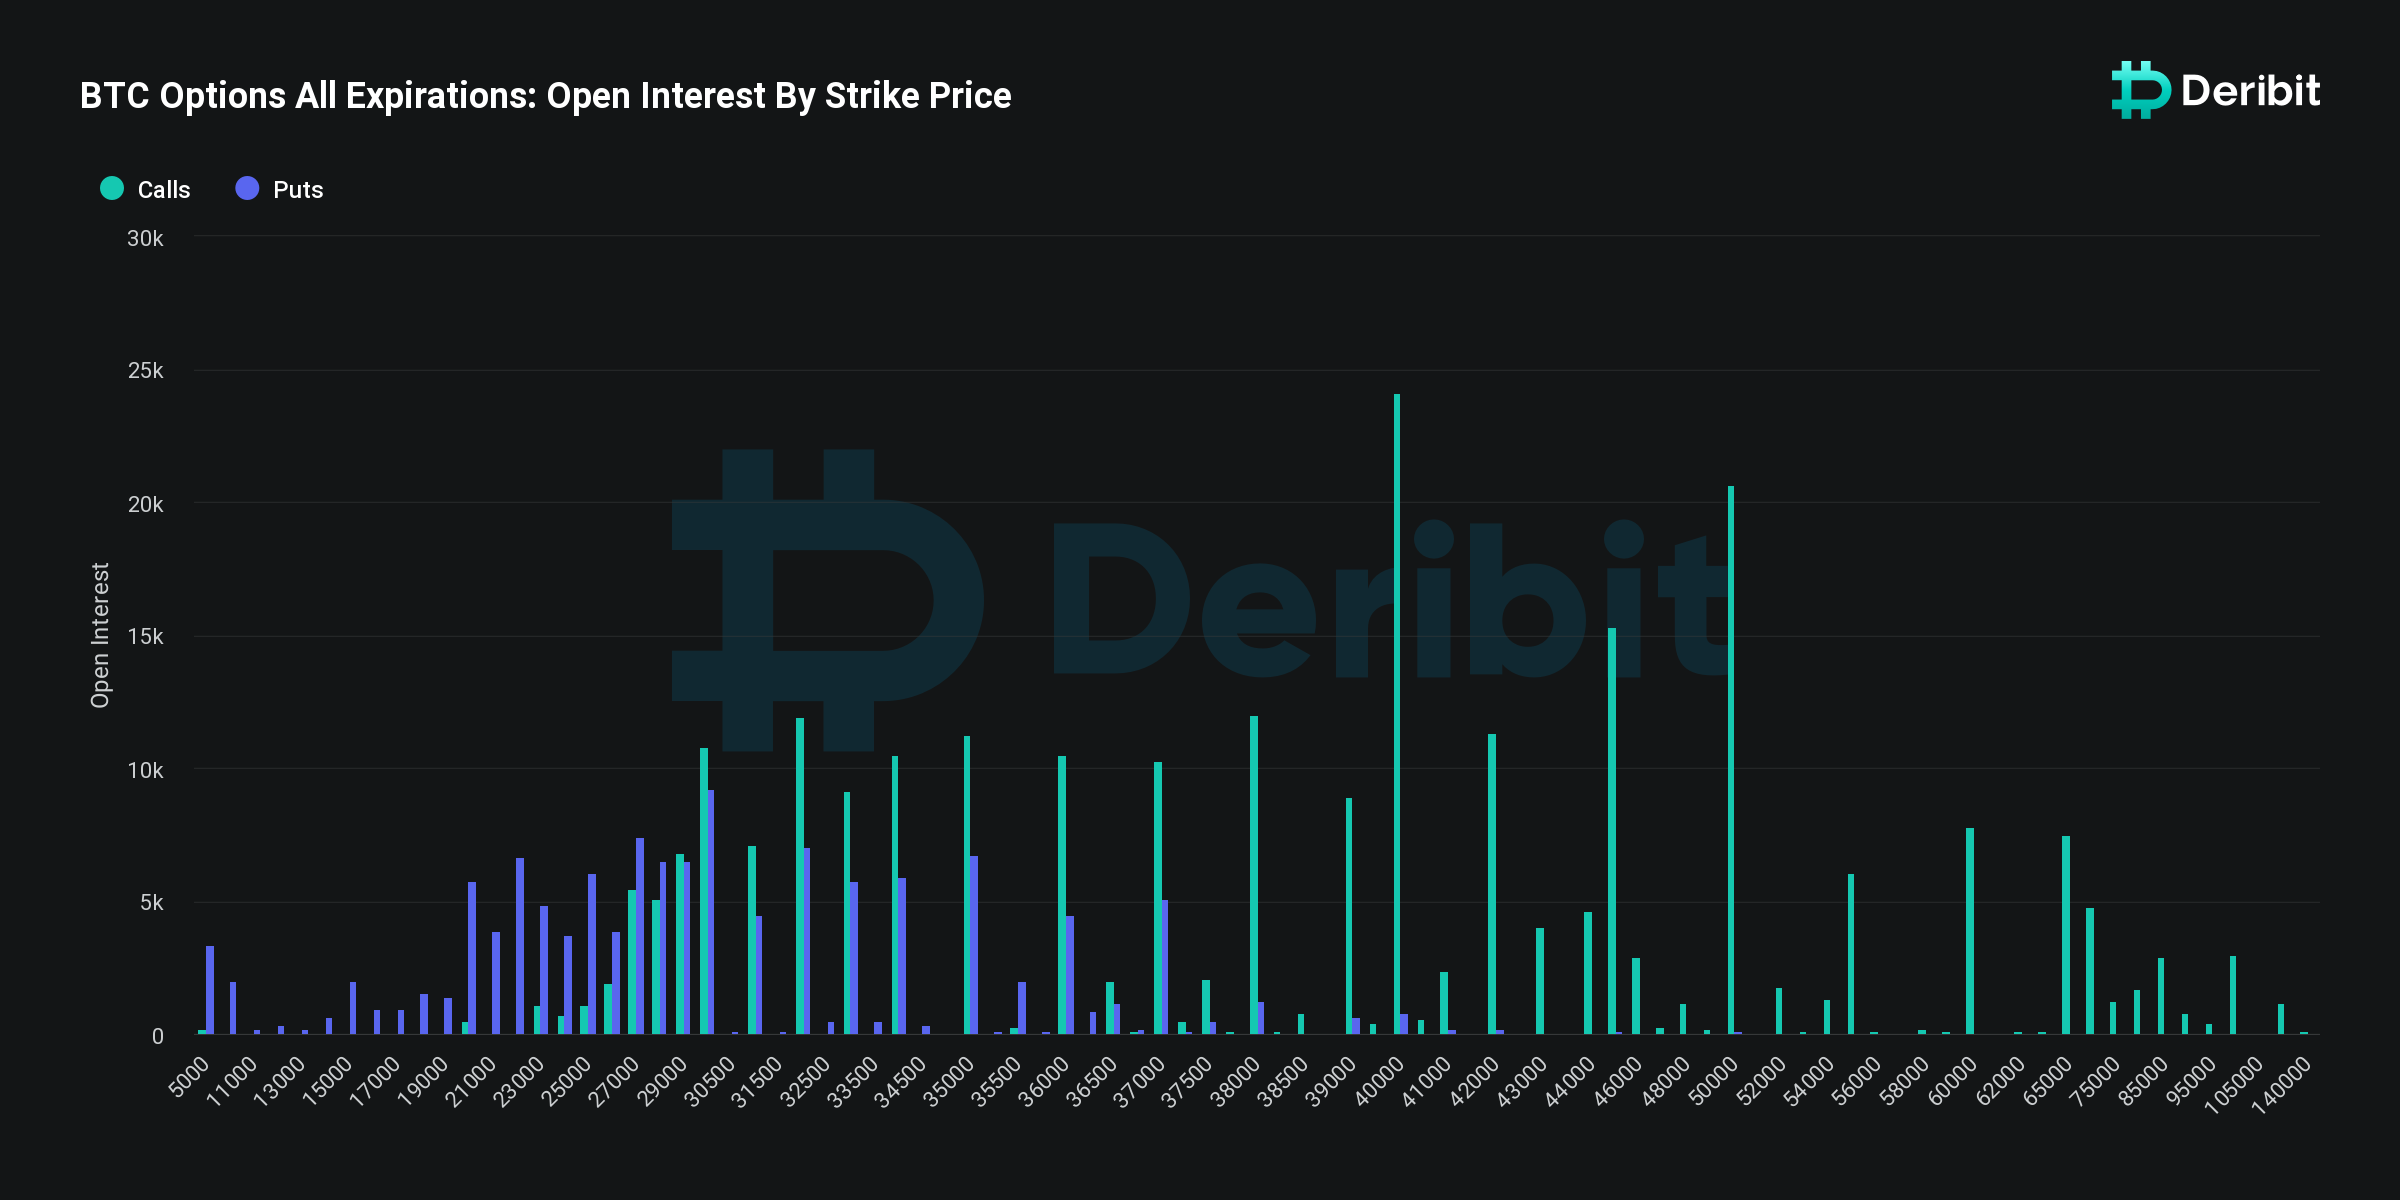 Bitcoin options open interest by strike price chart. Source: Deribit